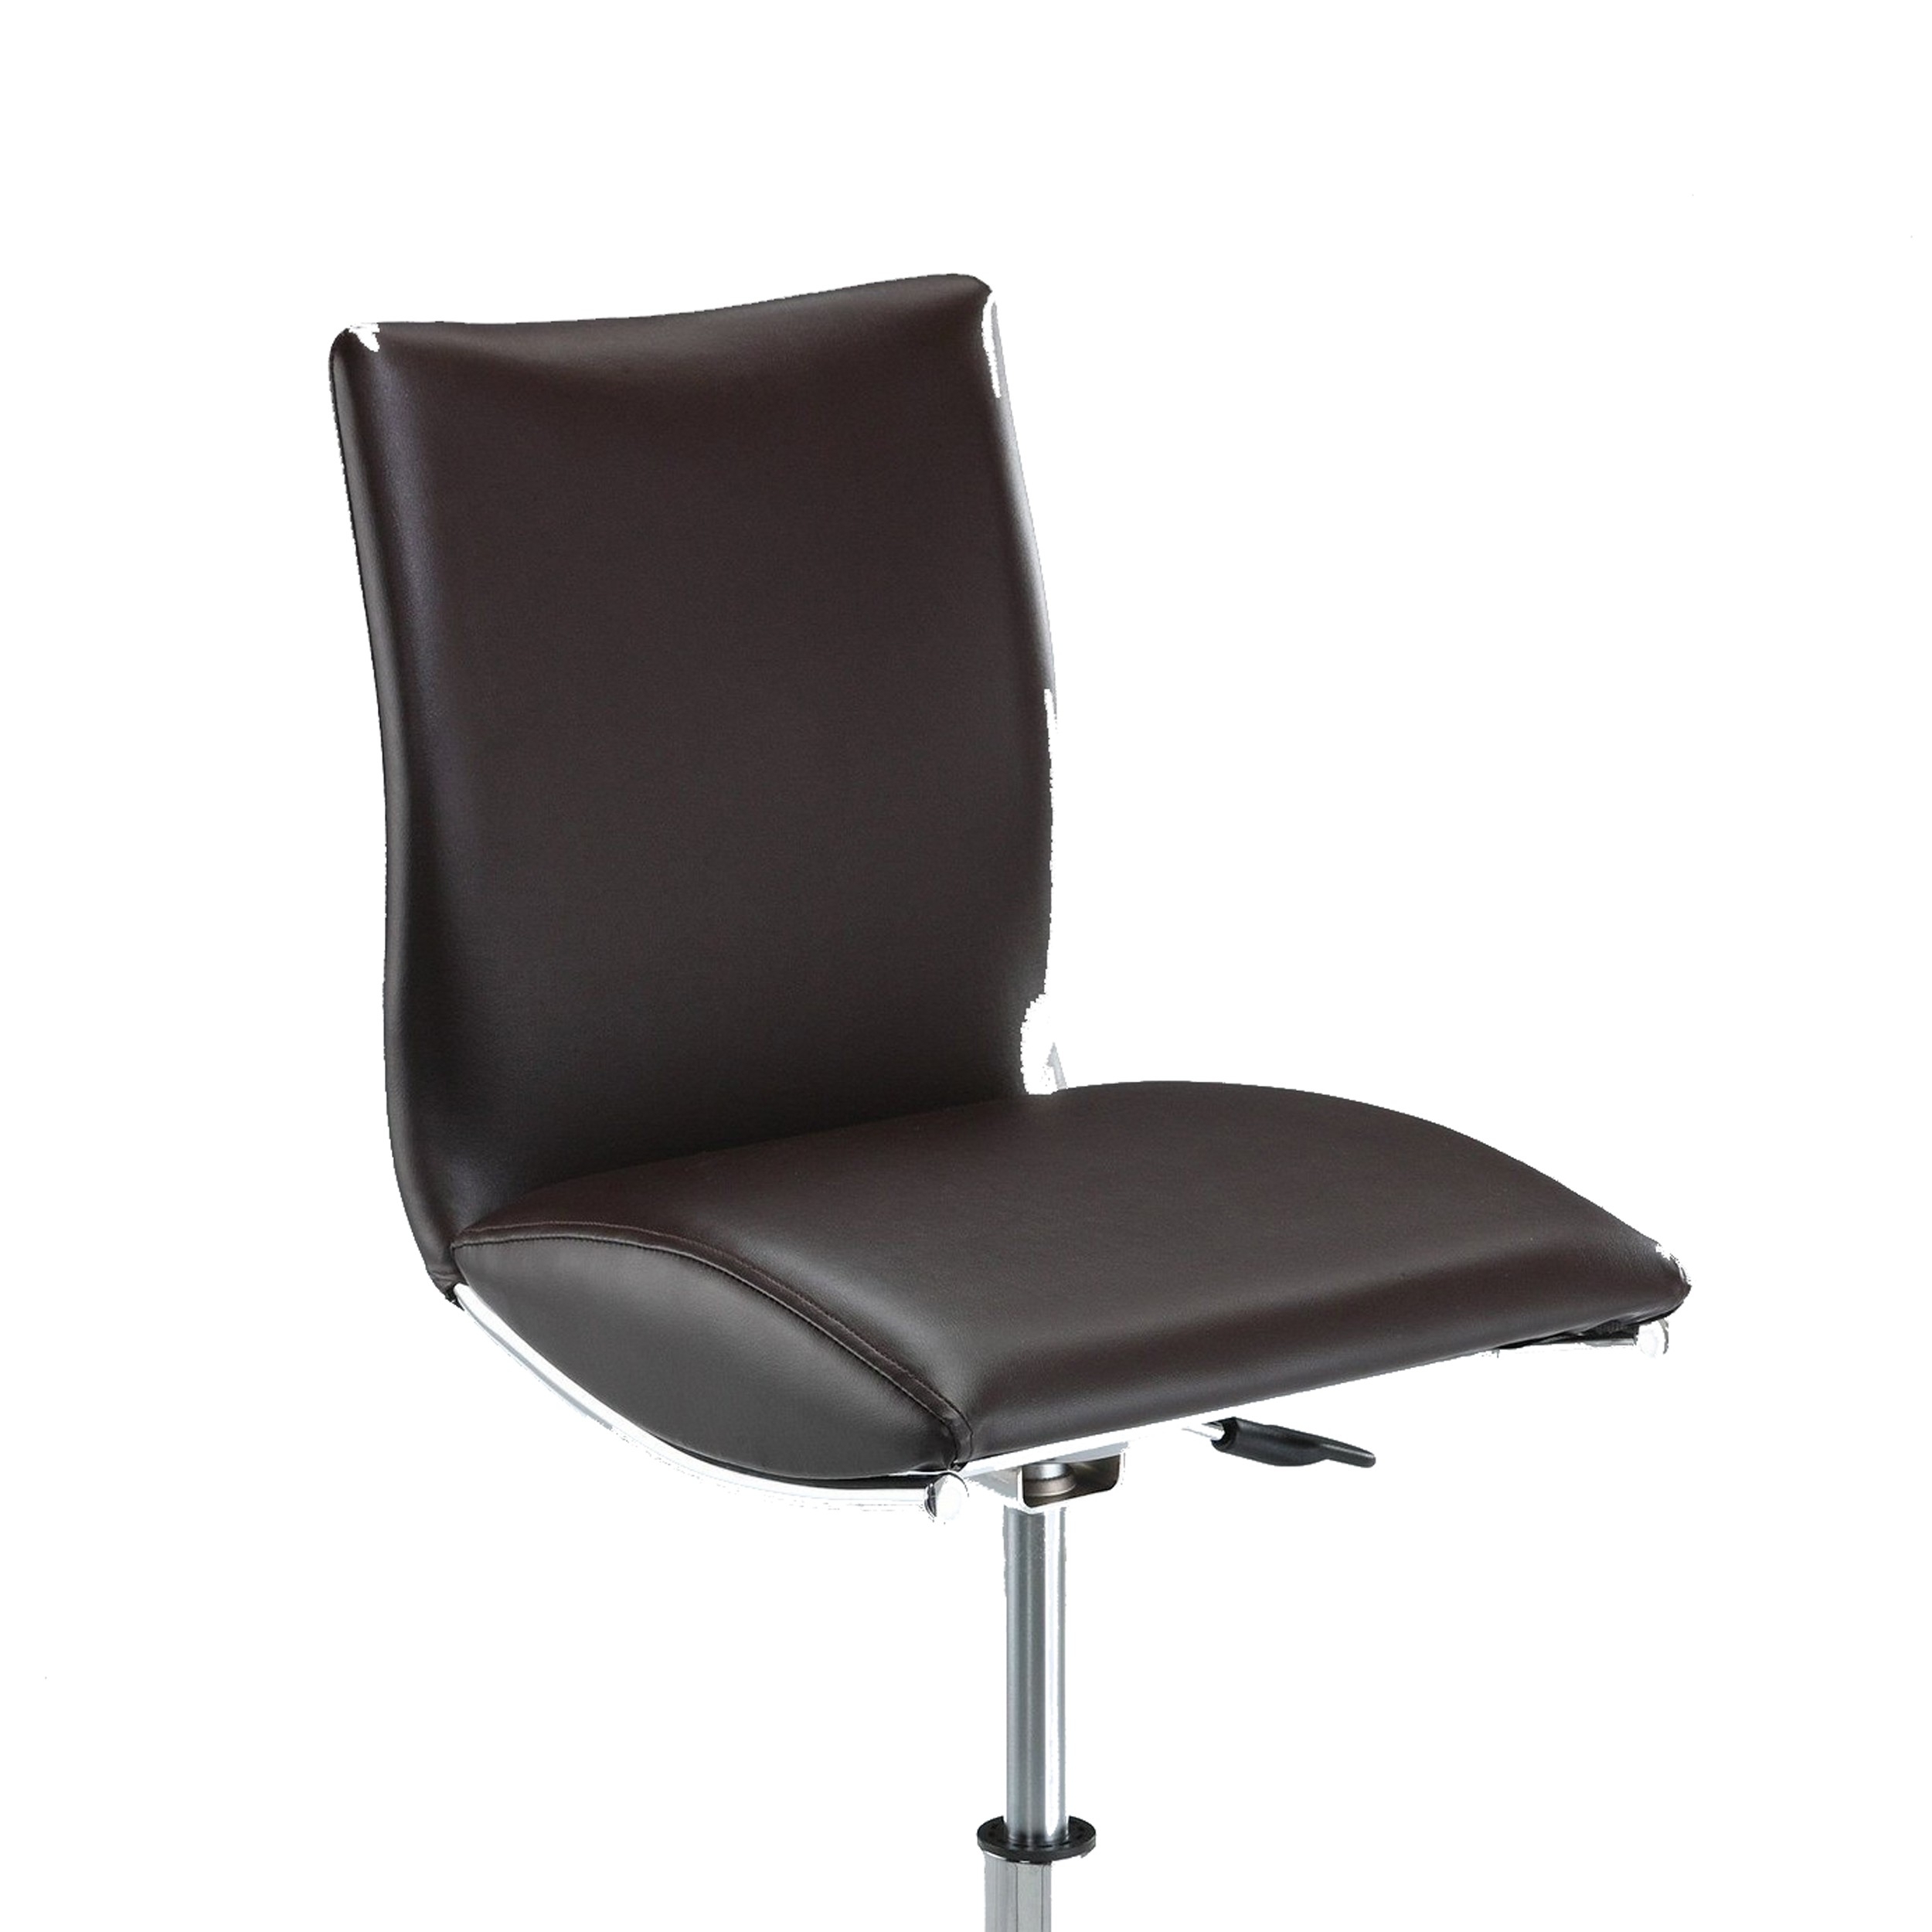 Deko 26-31 Inch Adjustable Height Barstool Chair, Set Of 2, Chrome Brown Faux Leather - Saltoro Sherpi